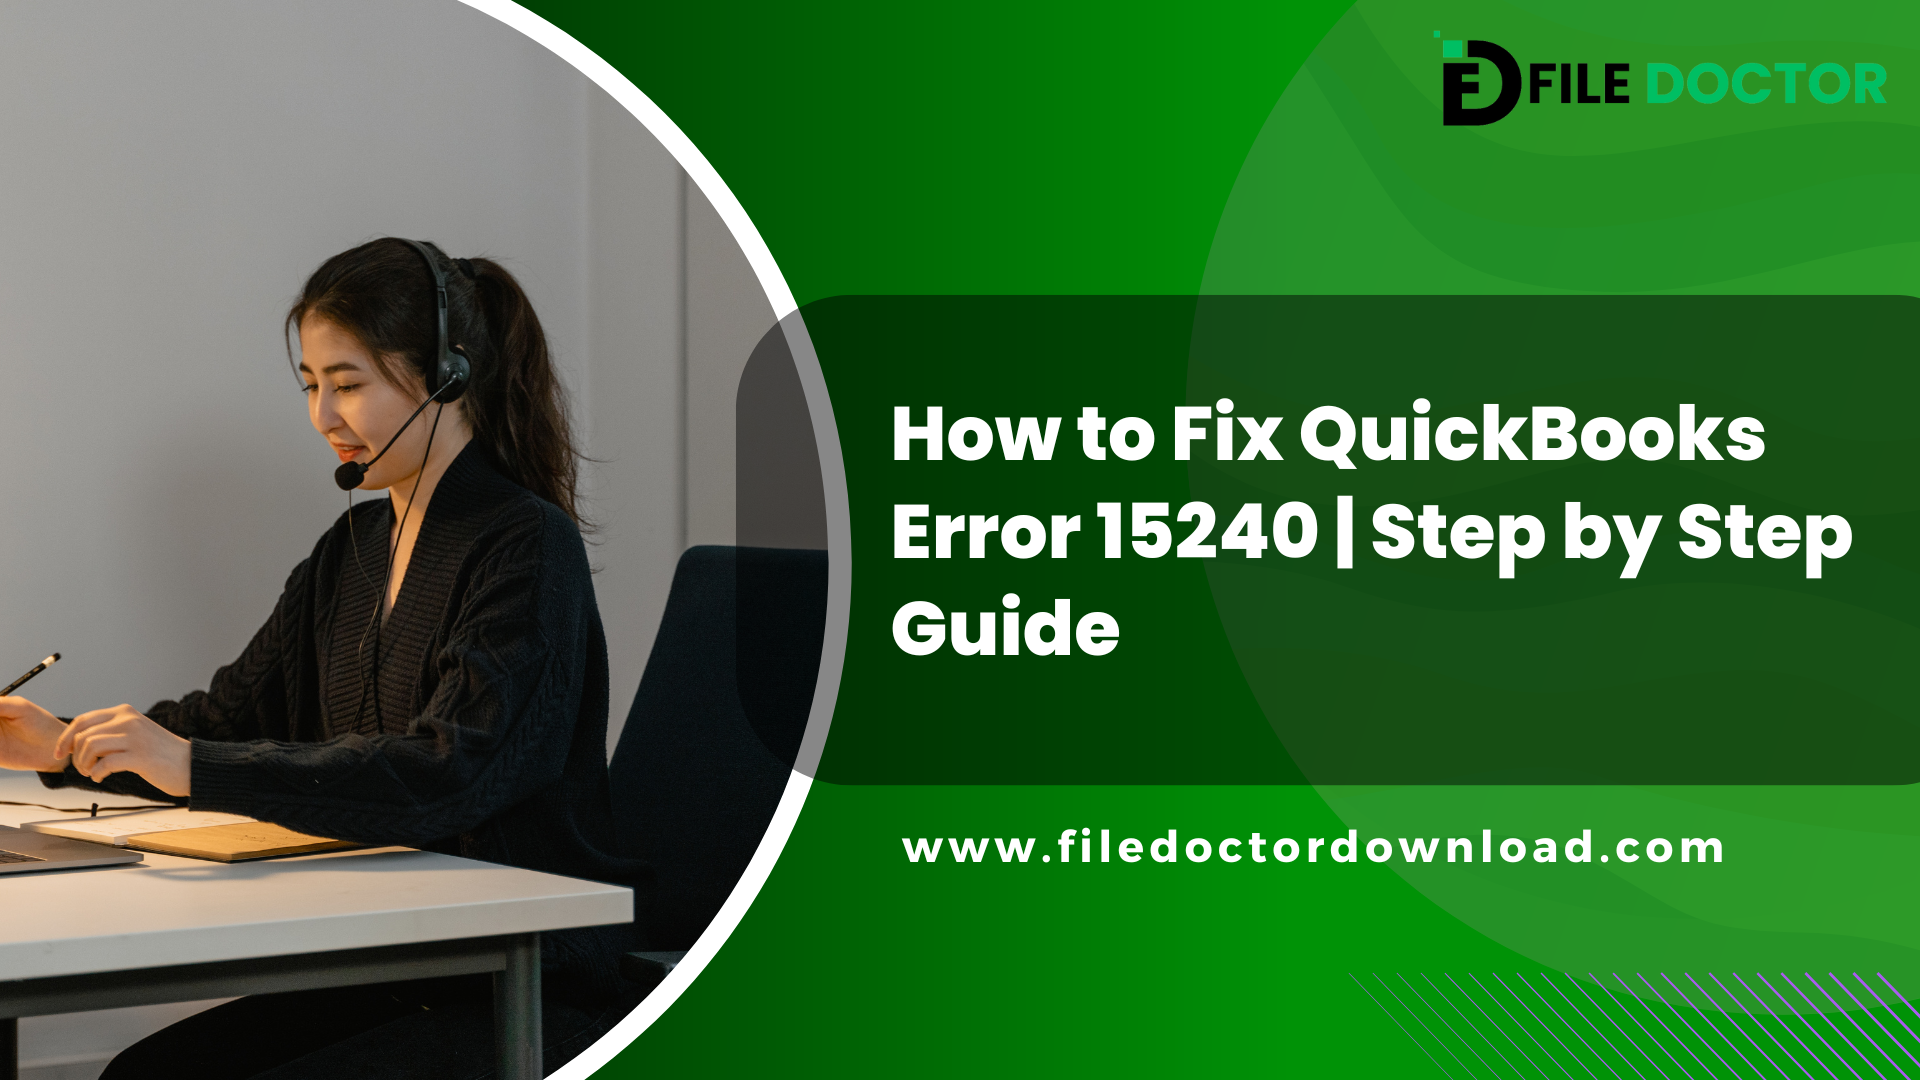 How to Fix QuickBooks Error 15240